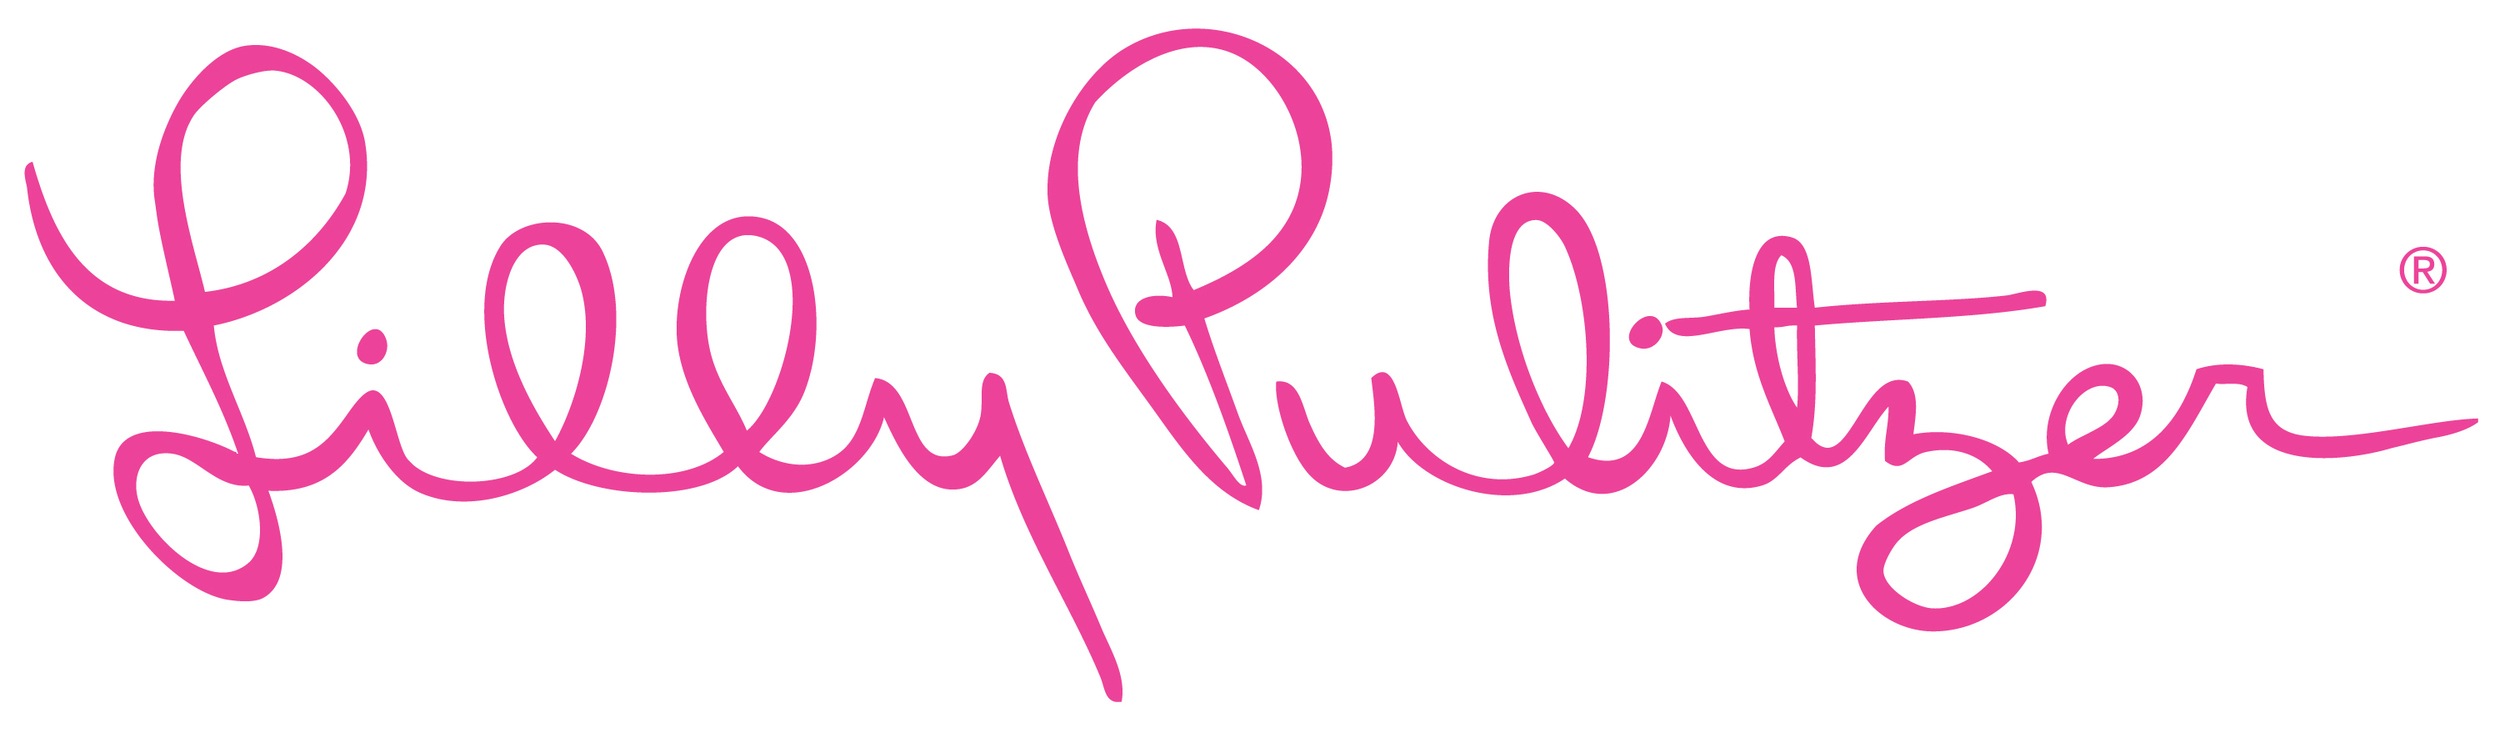 Lilly-Pulitzer-Logo.jpg